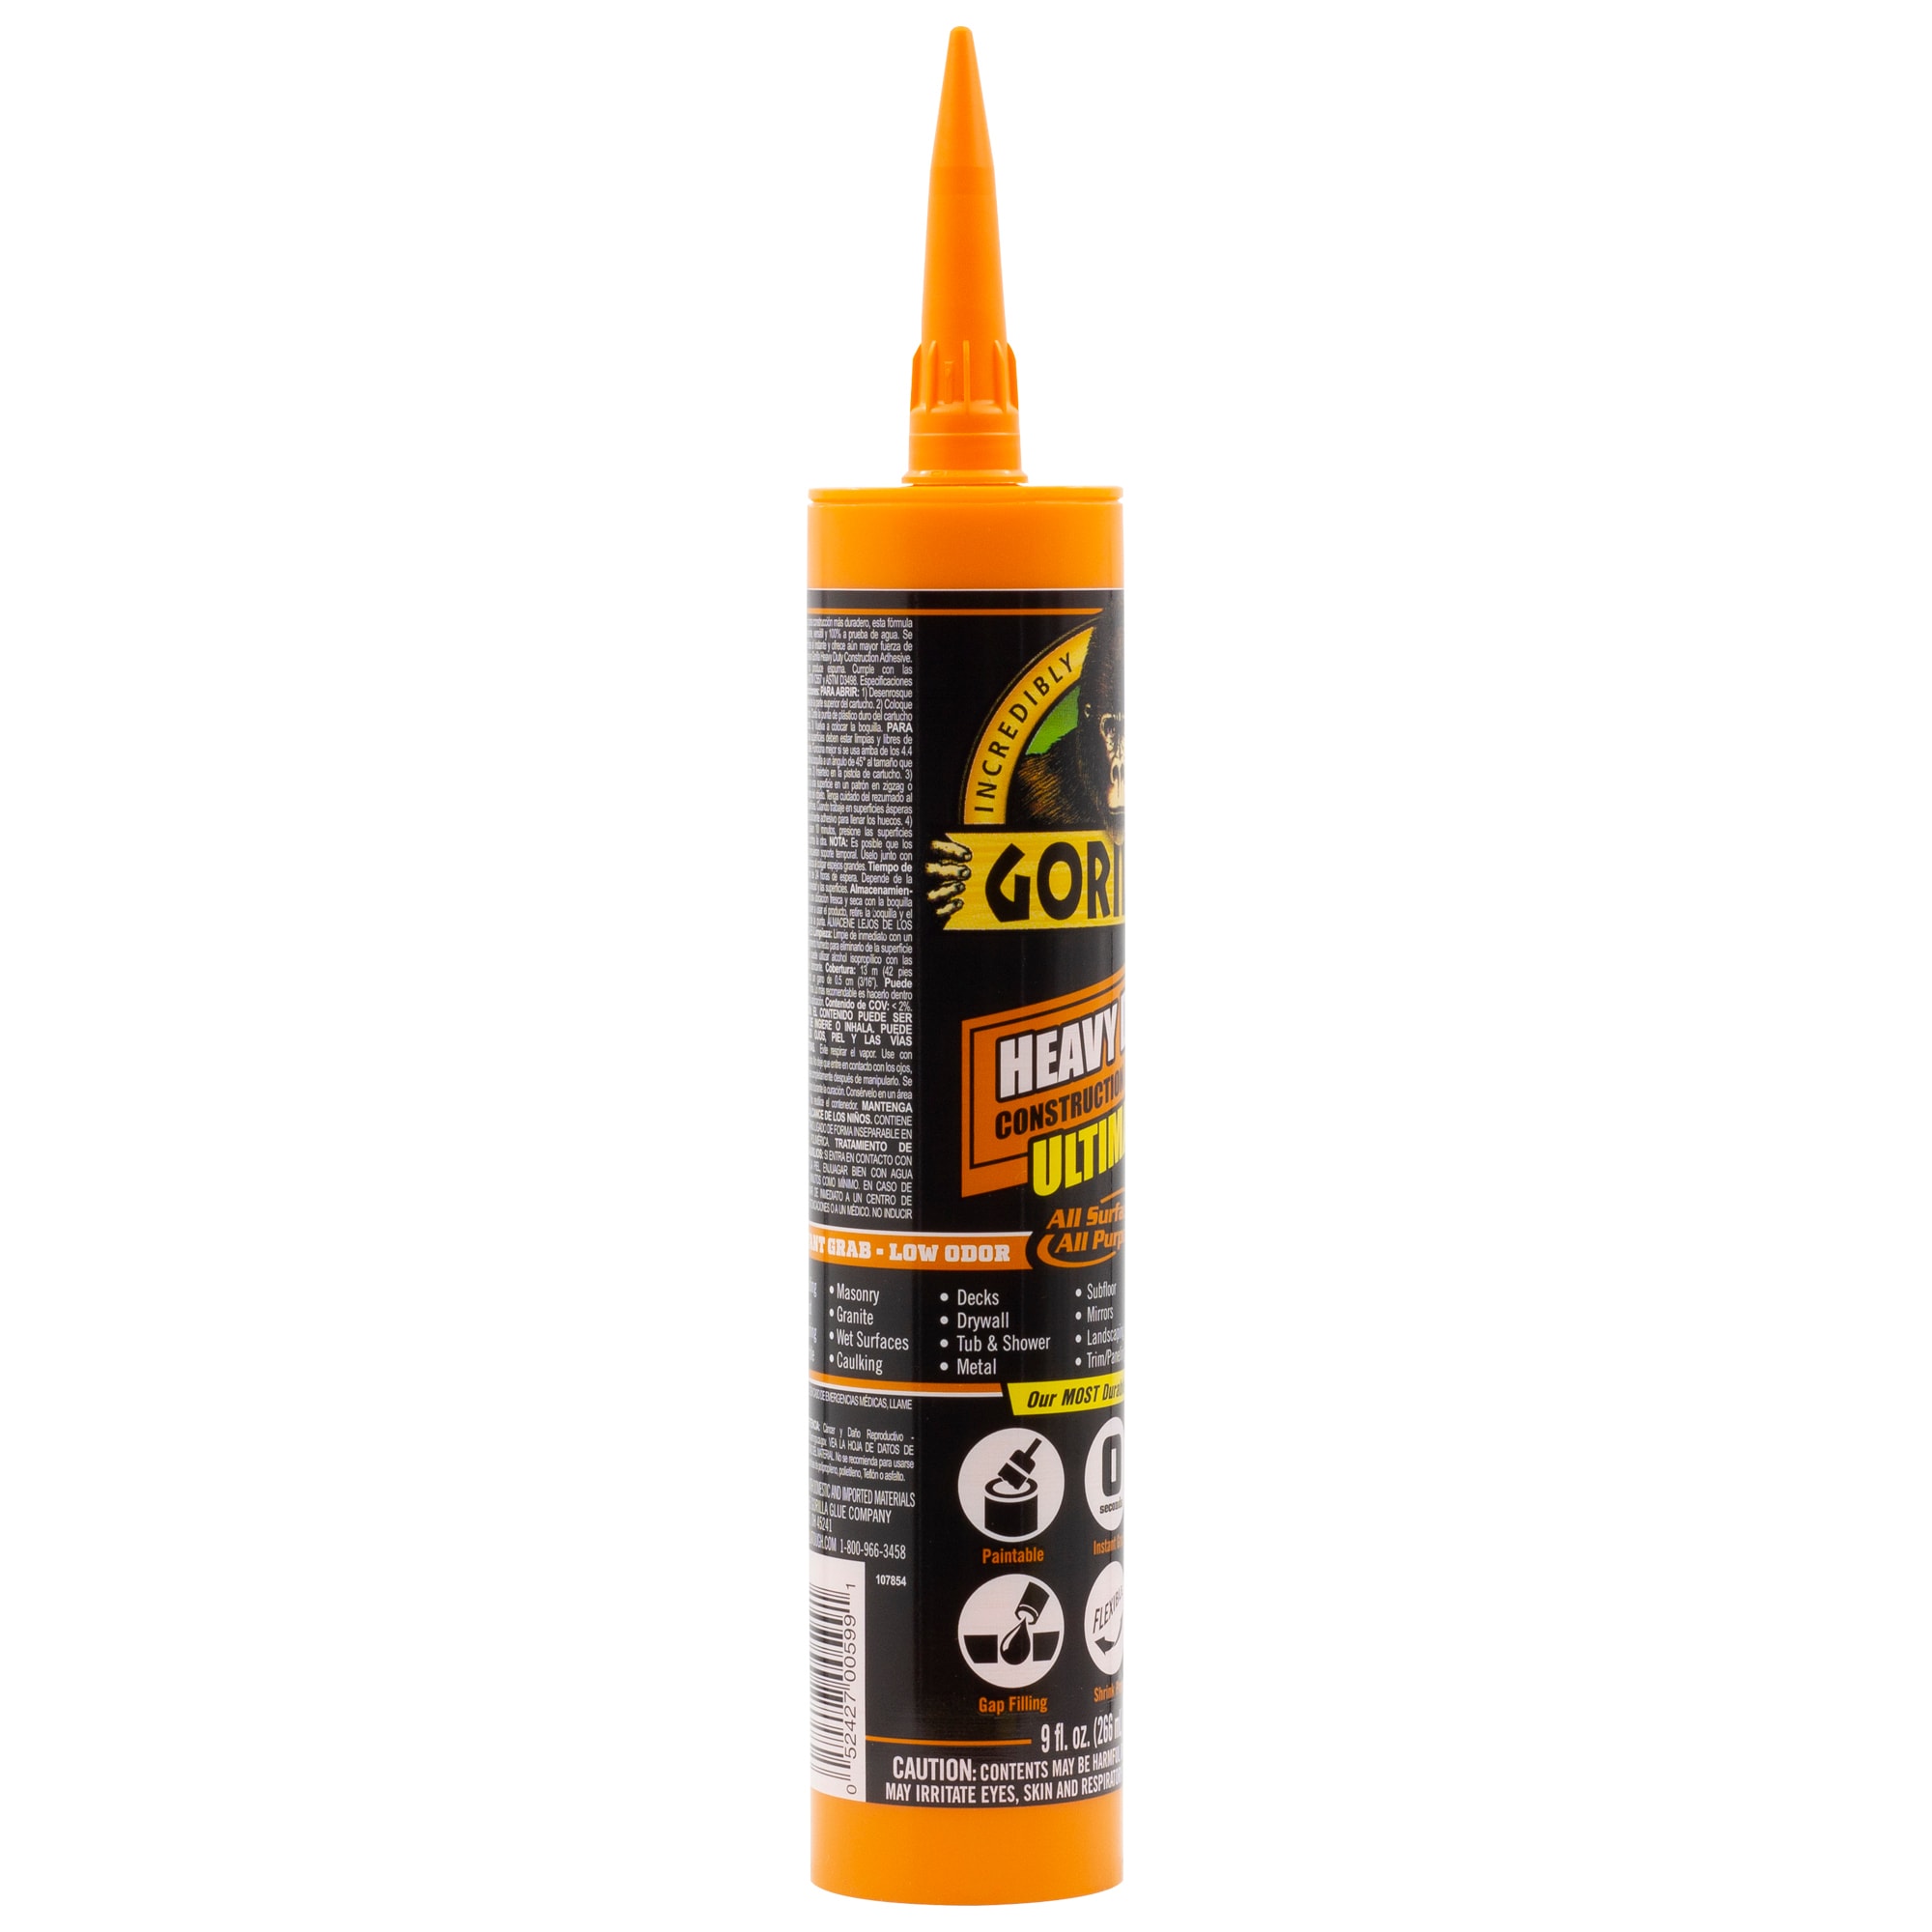 Gorilla Heavy Duty 14-oz Spray Adhesive at